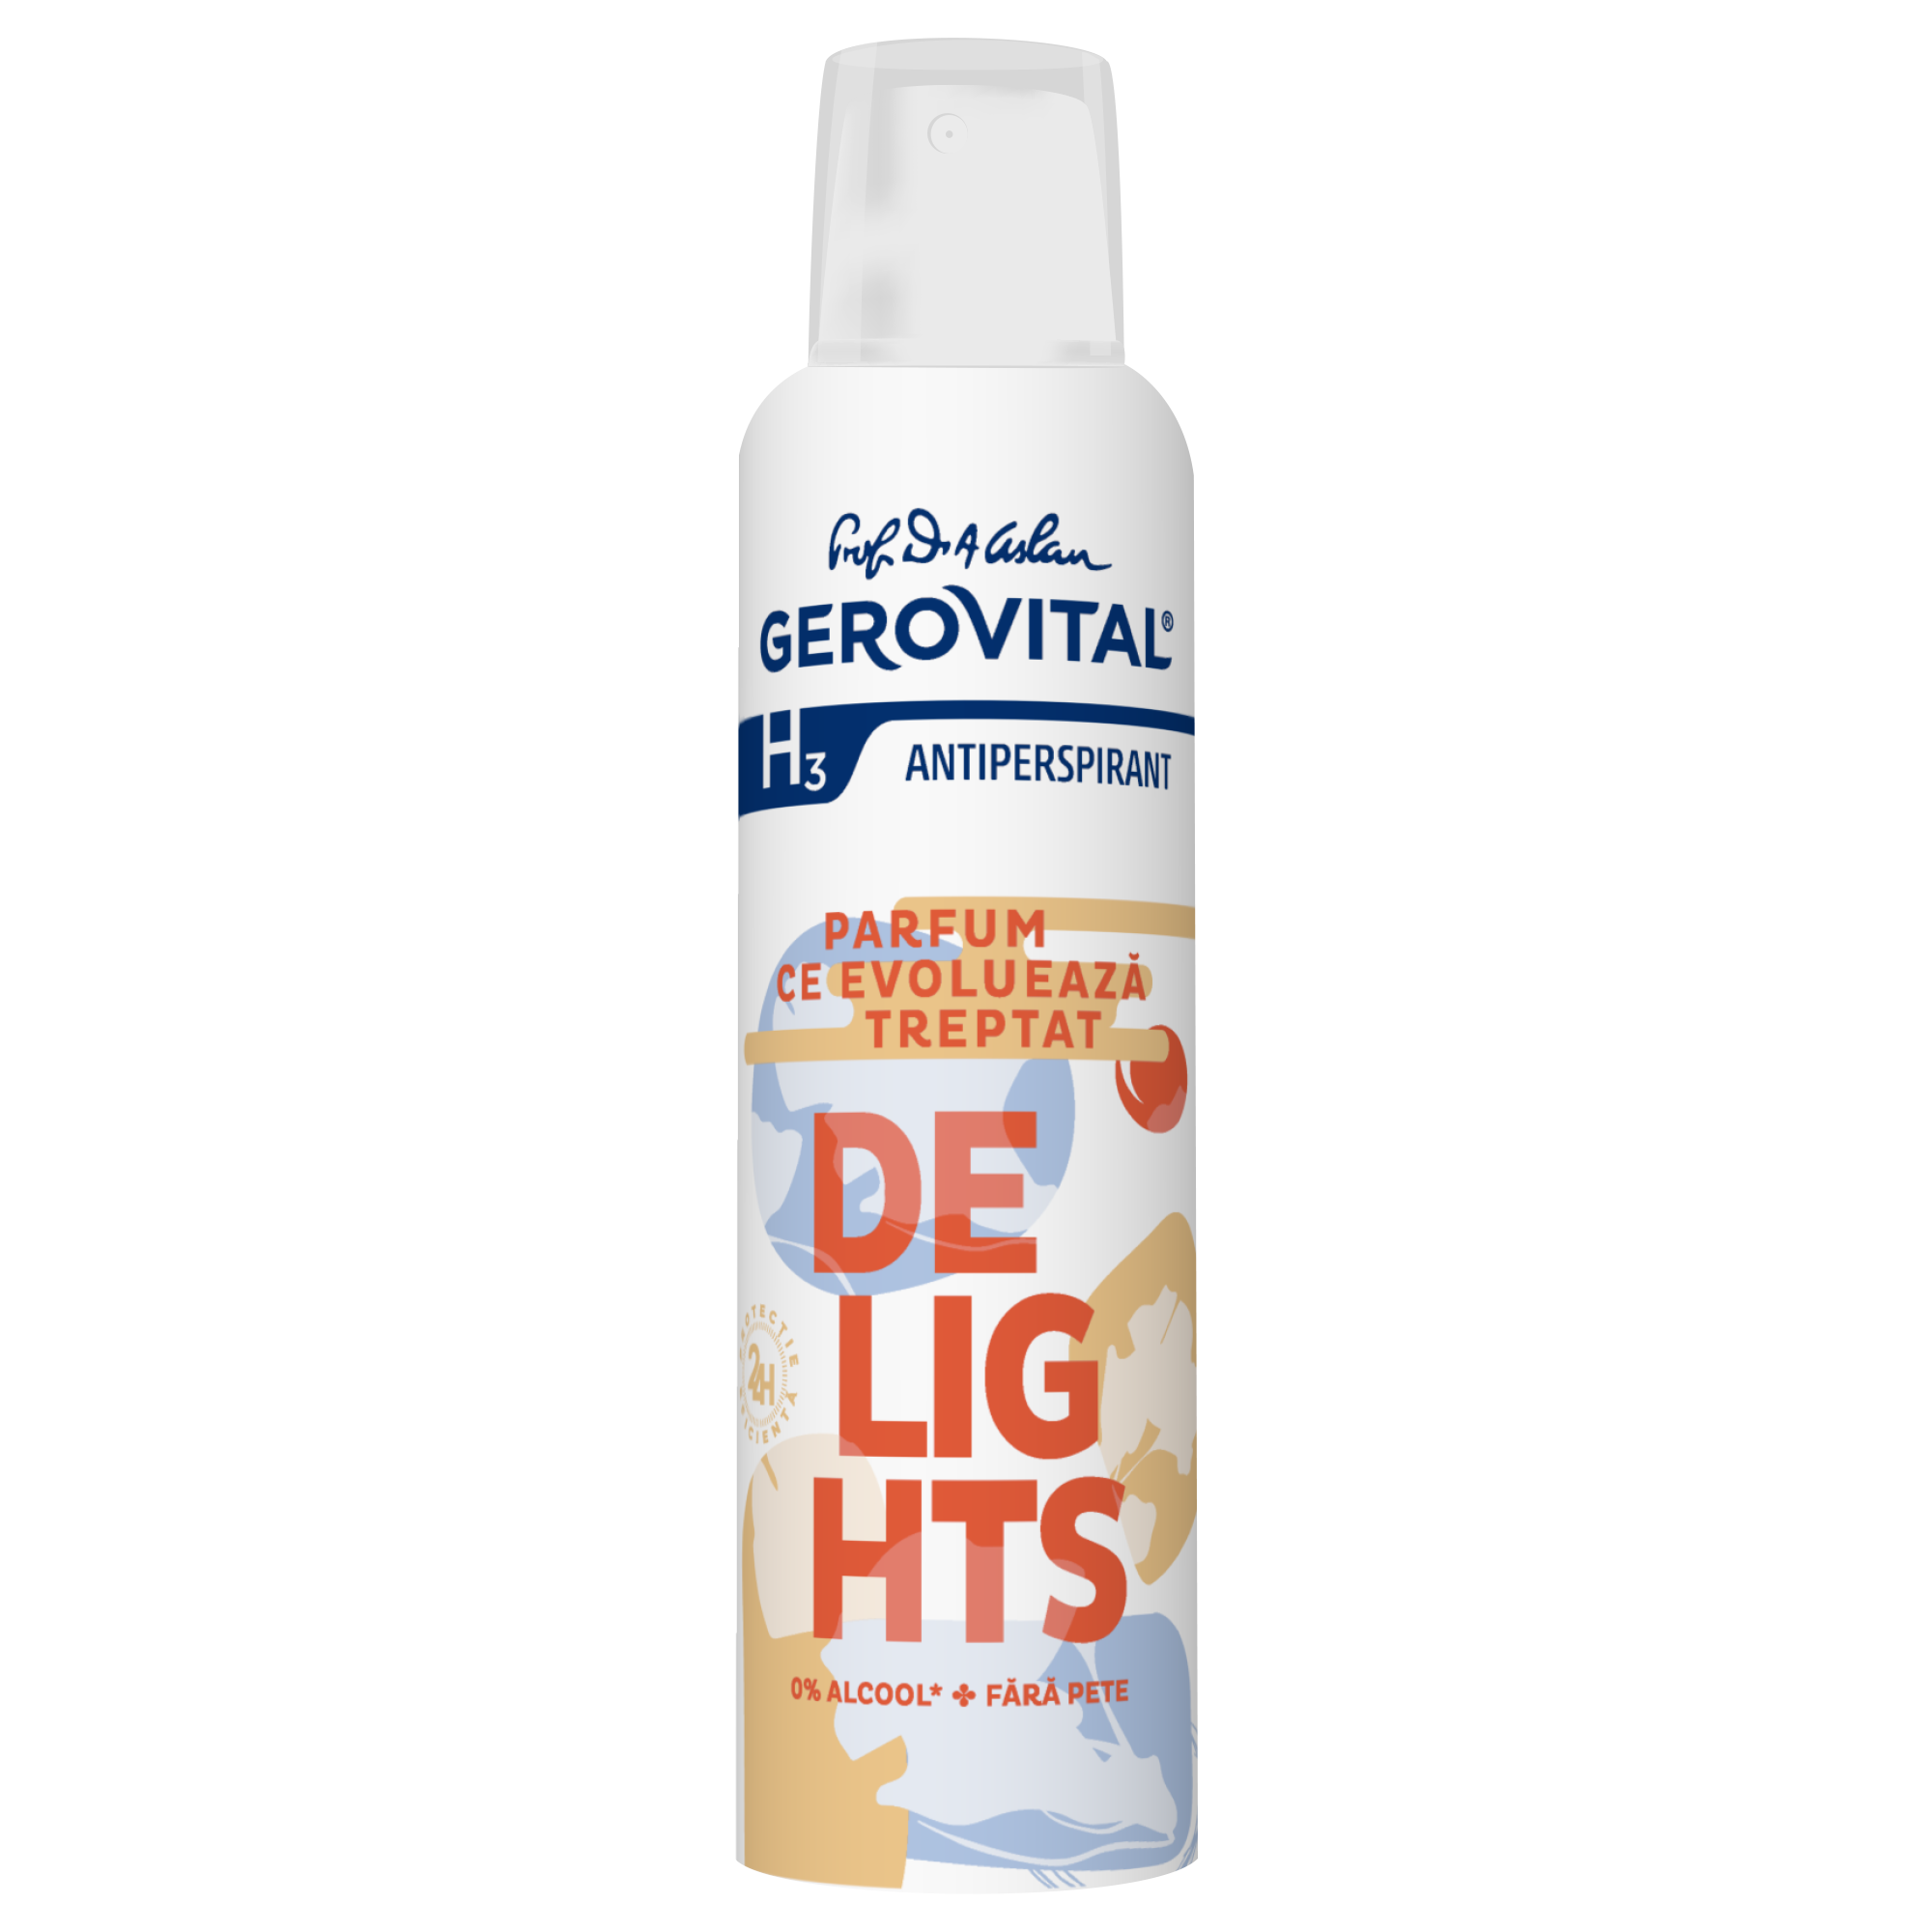 Deodorant spray Gerovital H3 Antiperspirant, Delight, 150 ml, Gerovital